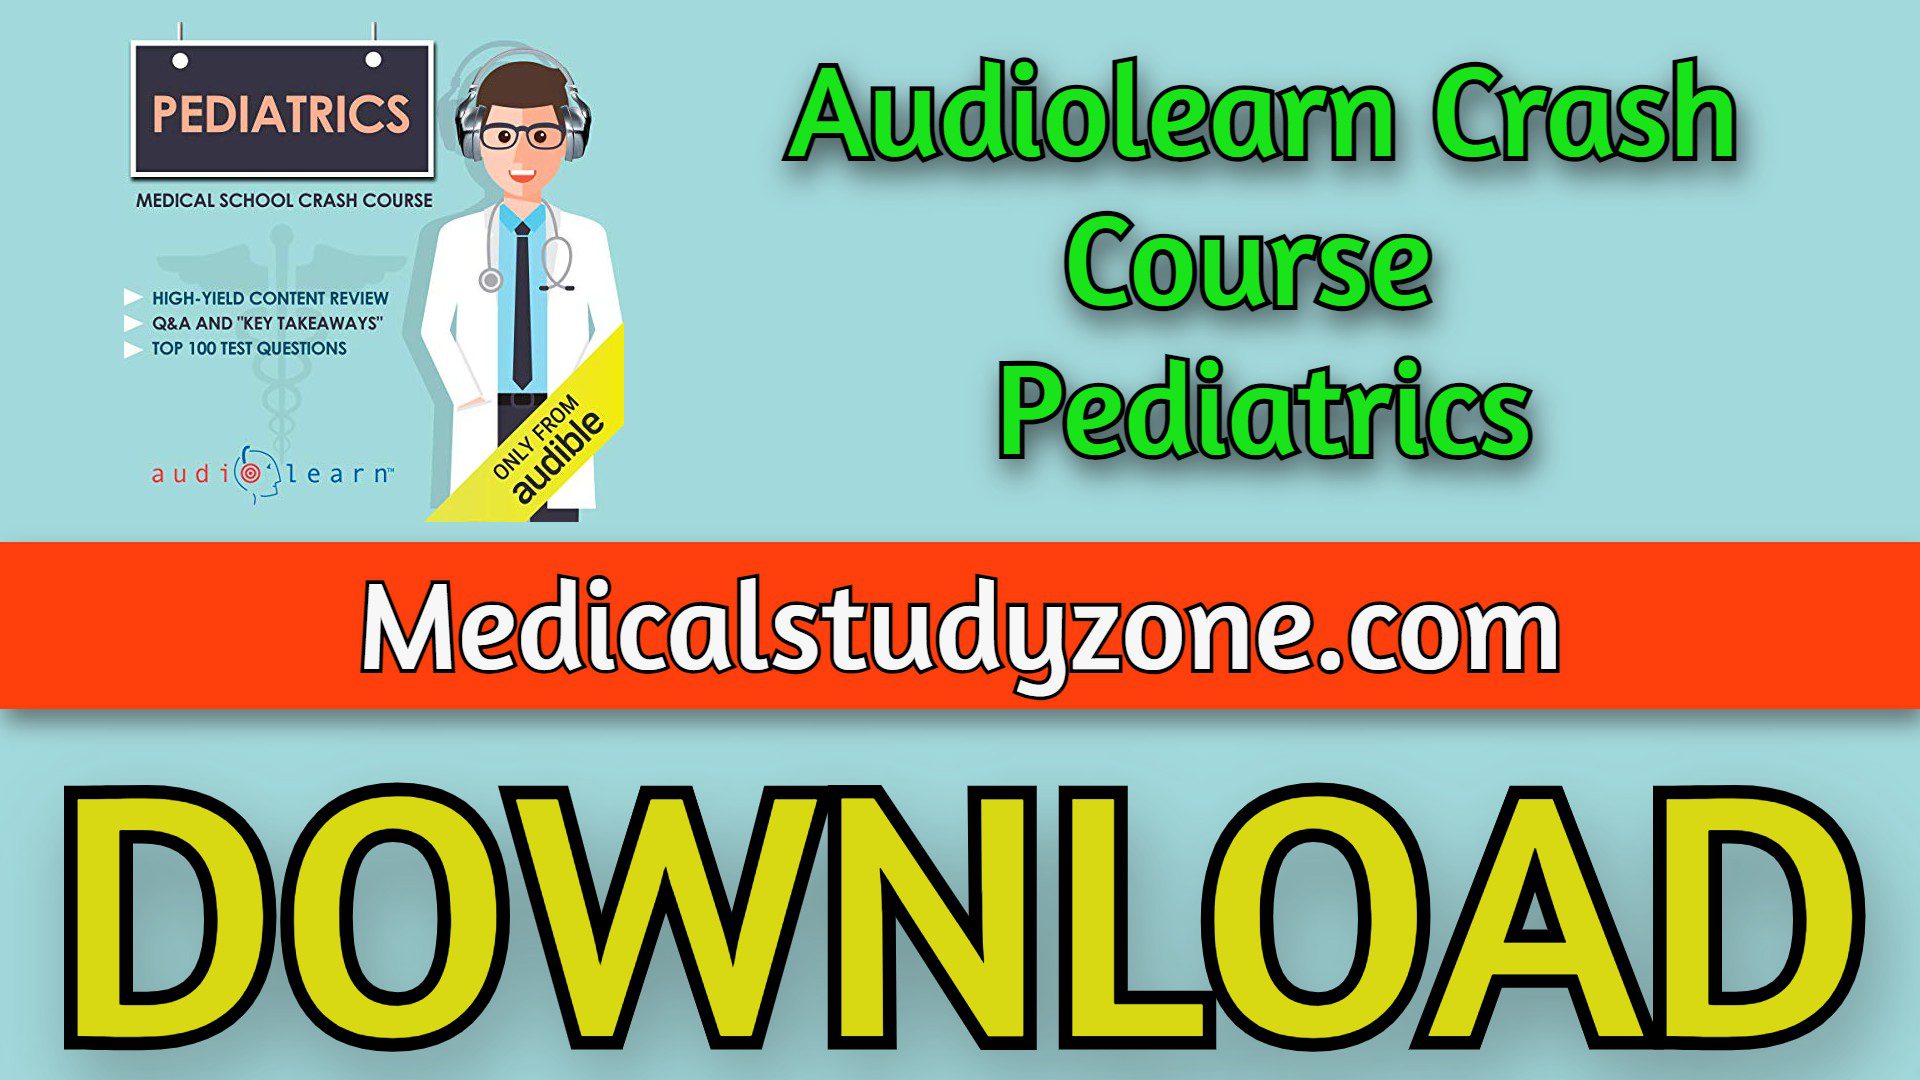 Audiolearn Crash Course Pediatrics 2021 Free Download